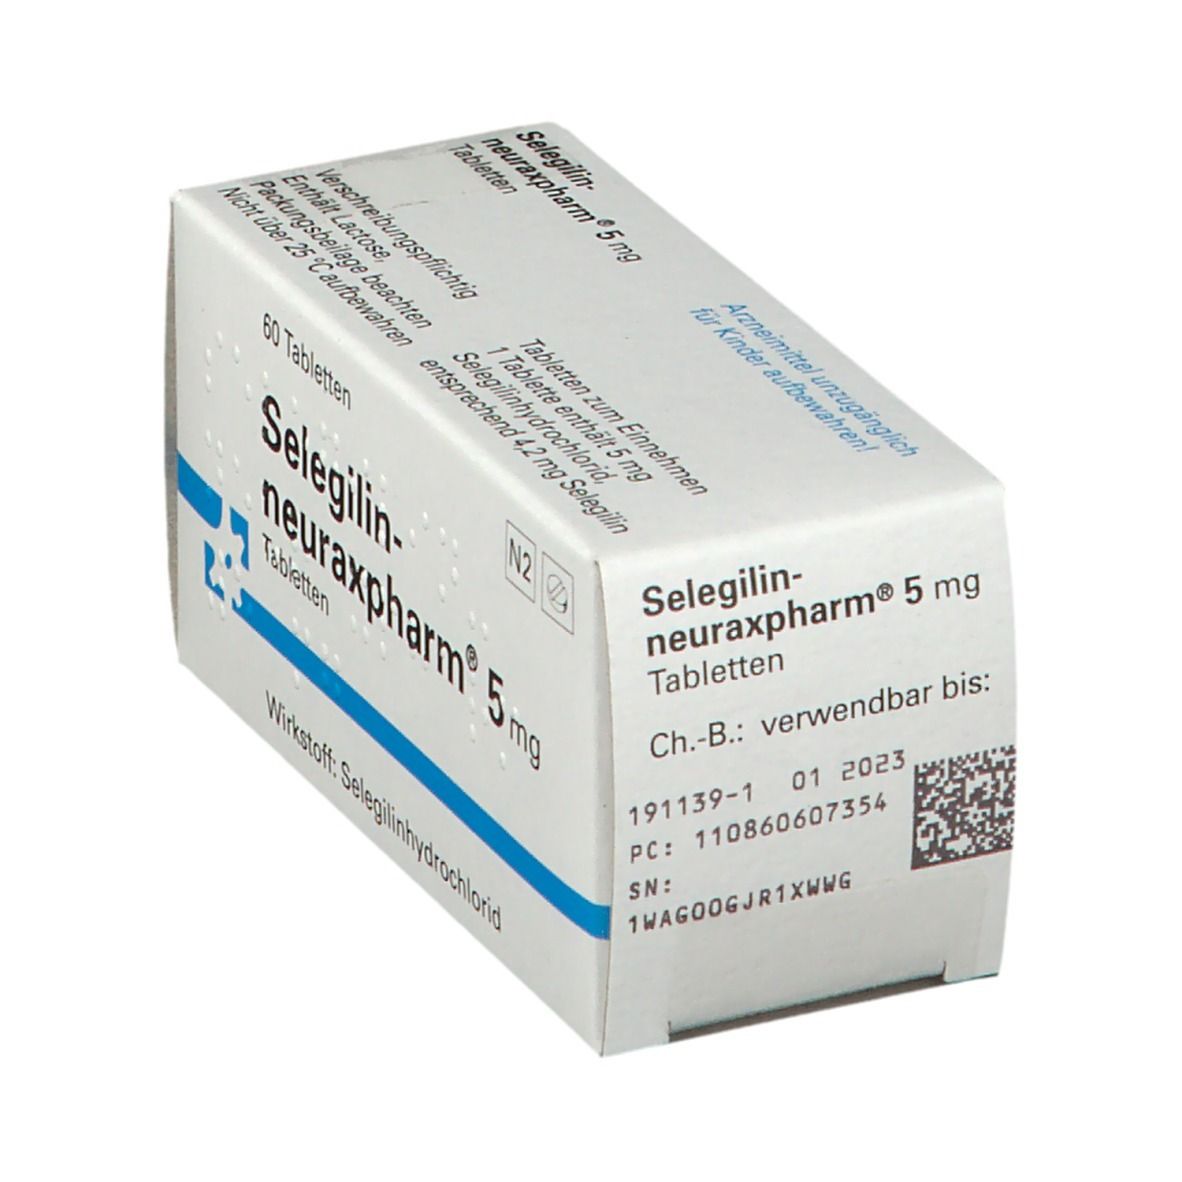 Selegilin-neuraxpharm® 5 mg